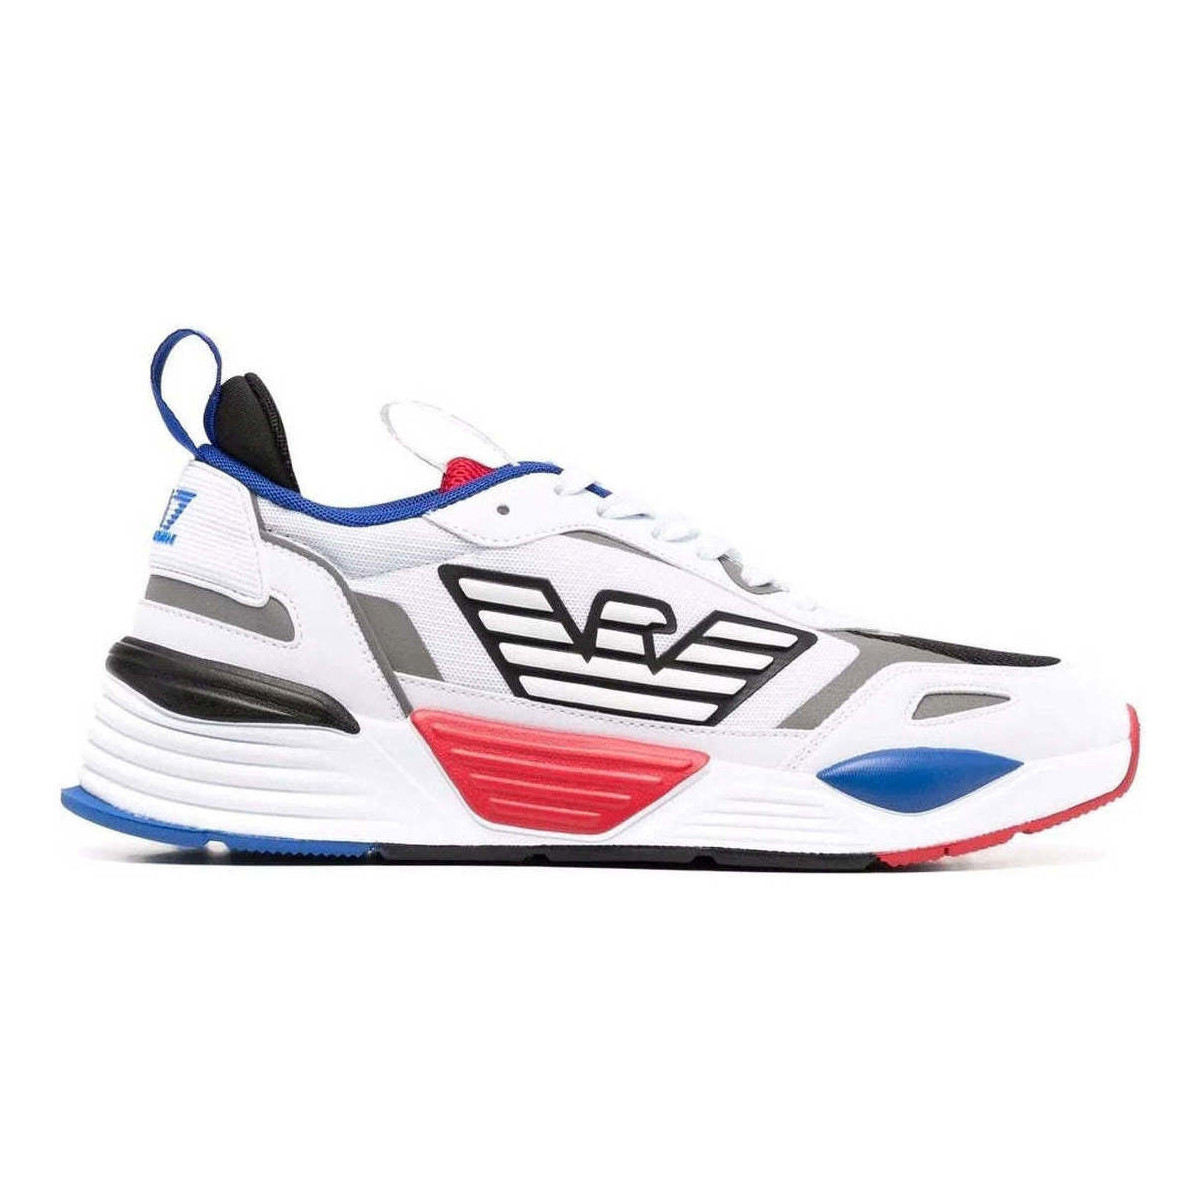 Chaussures Baskets basses Emporio Armani EA7 optwht racrd balt bl casual closed sneaker Blanc